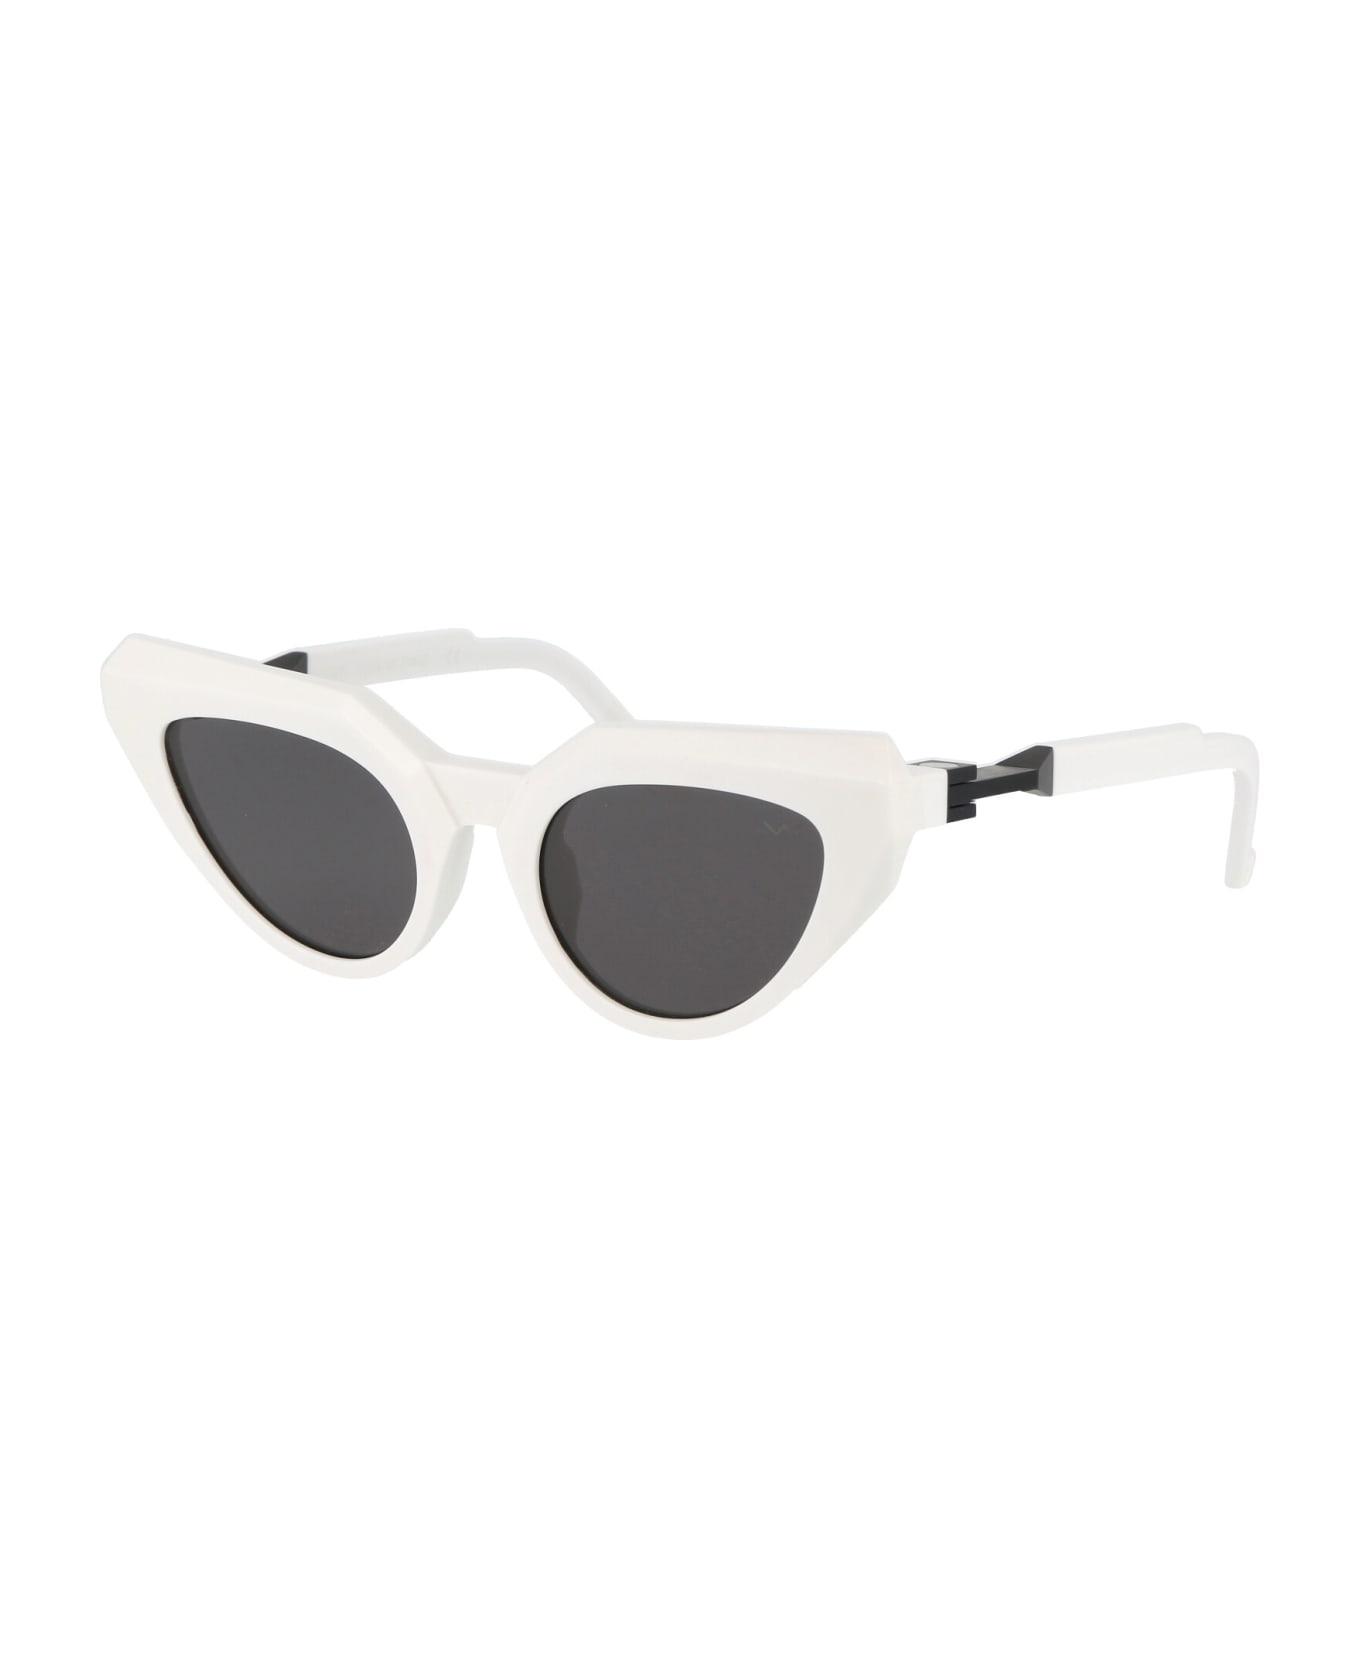 VAVA Bl0028 Sunglasses - Black Victimy Sunglasses